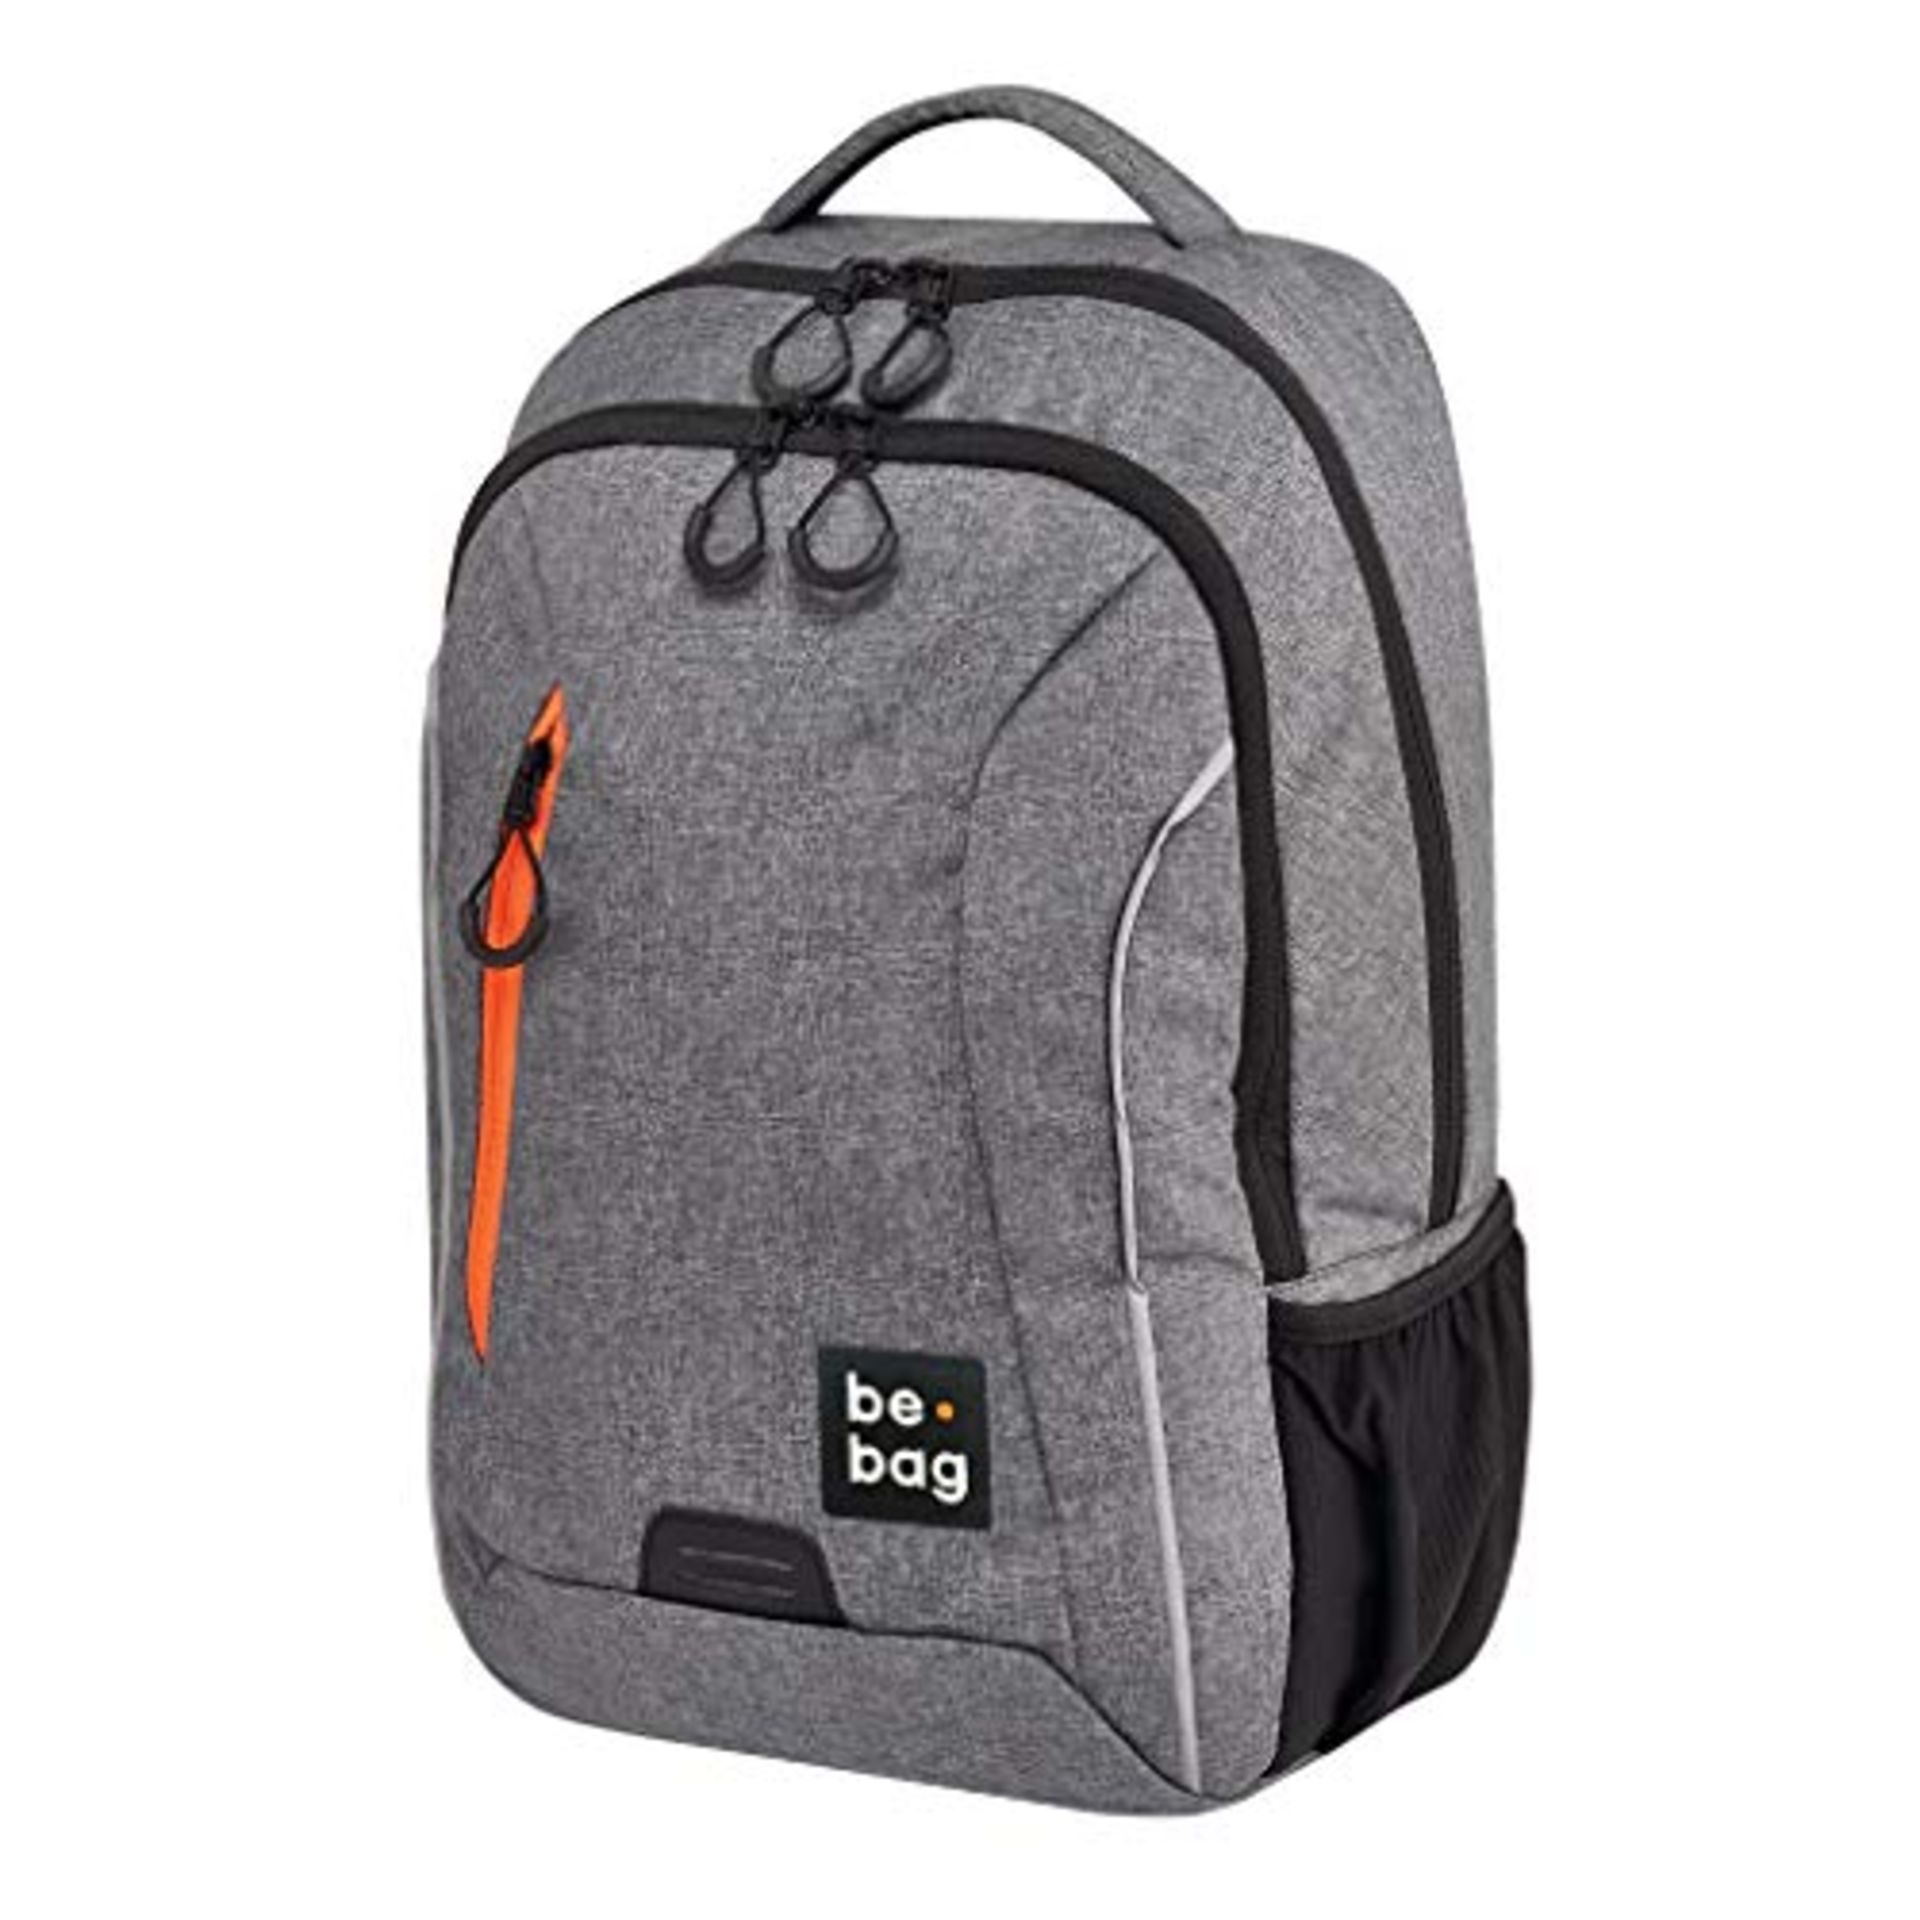 Backpack 24800099 Urban, 43 cm, 18 liters, grey melange